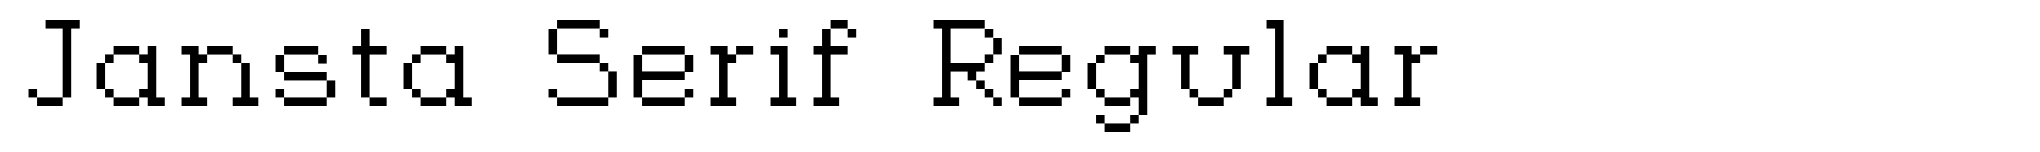 Jansta Serif Regular image